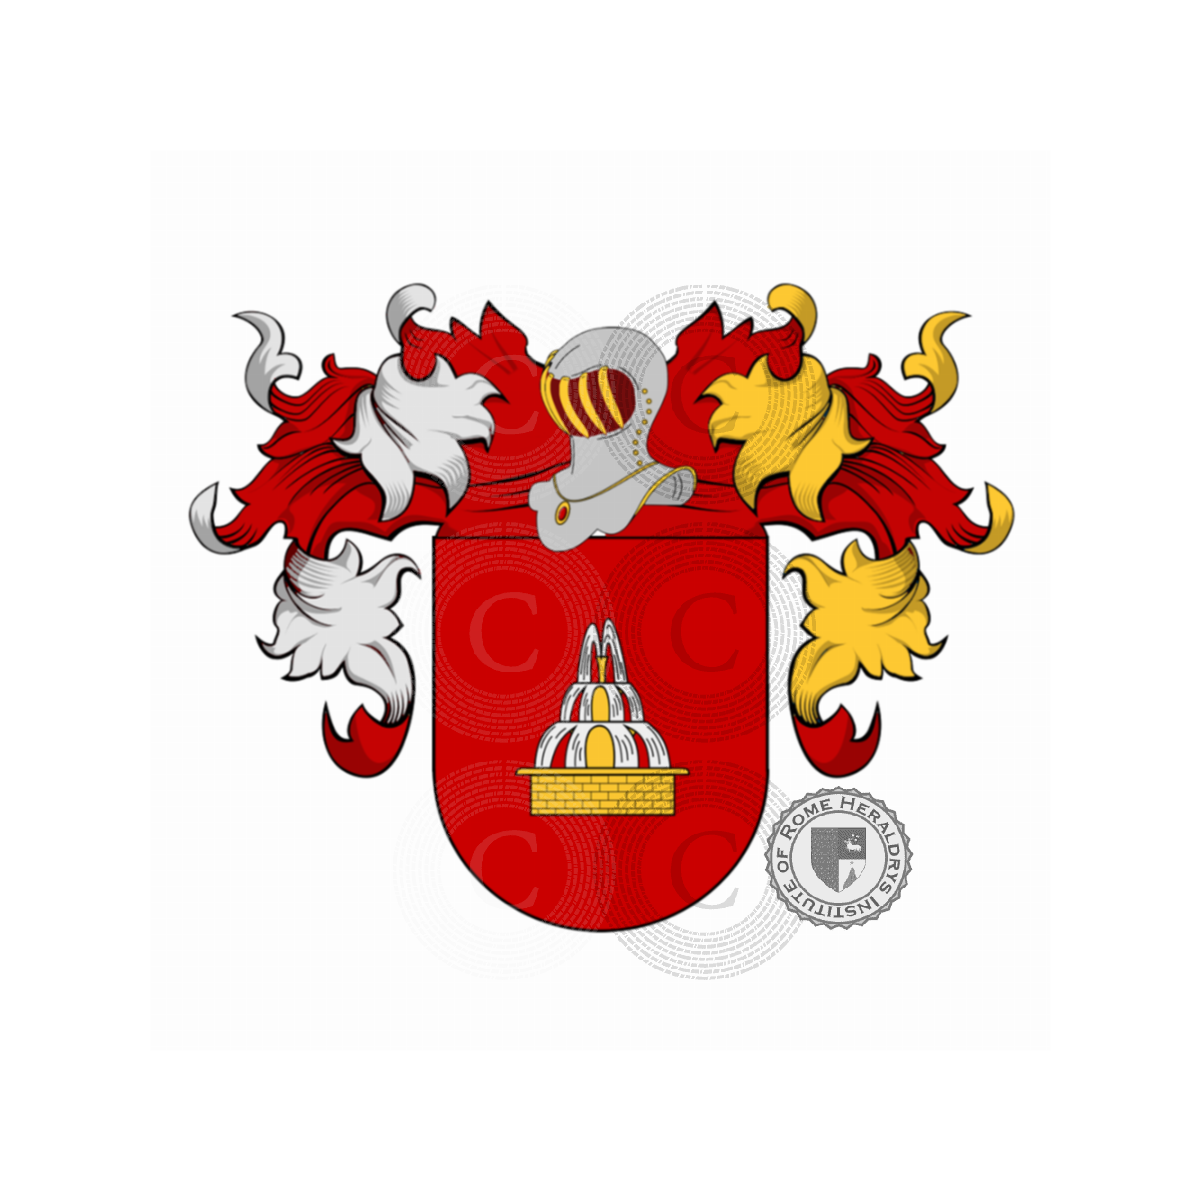 Coat of arms of familyCazorla